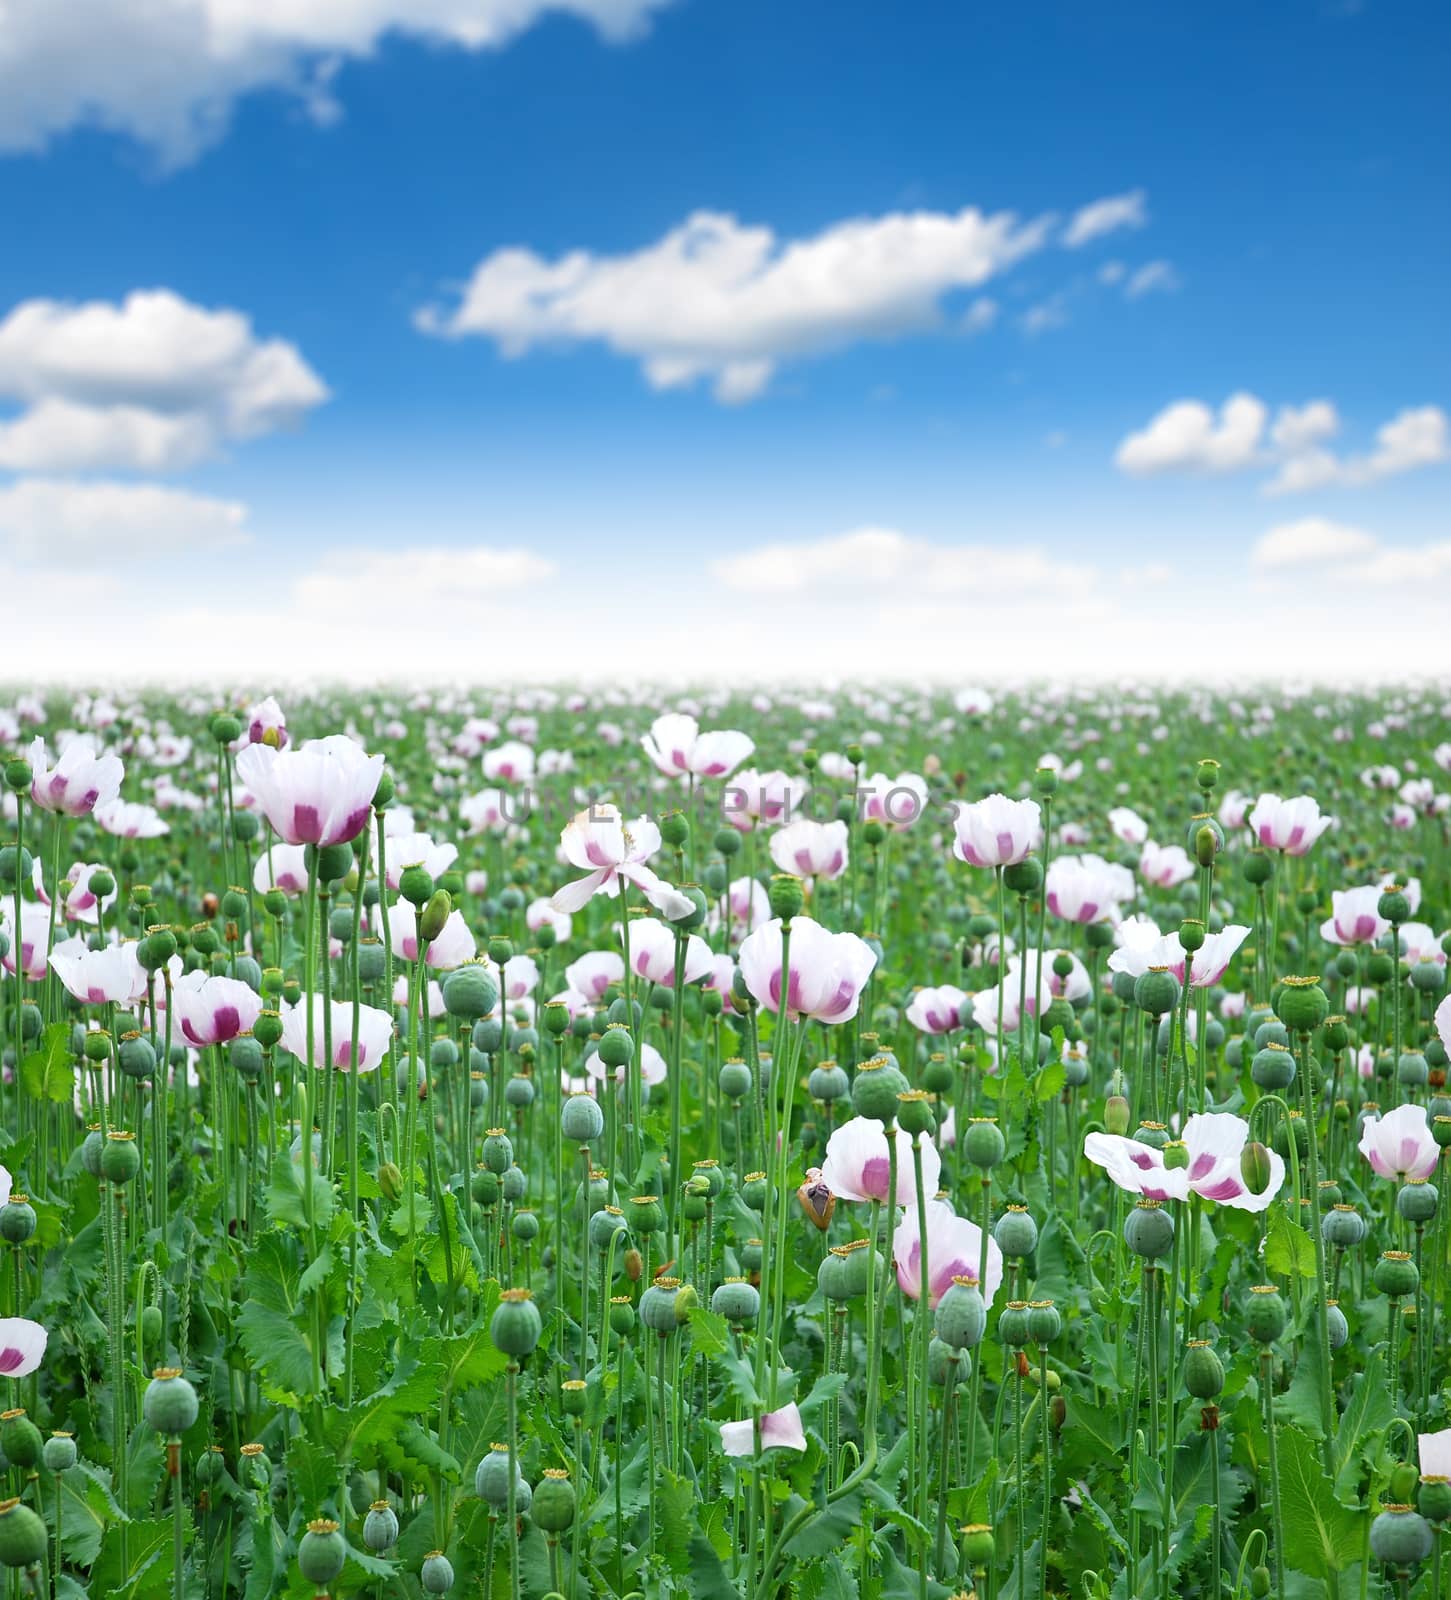 Field sown with poppy Opium poppy in bloom